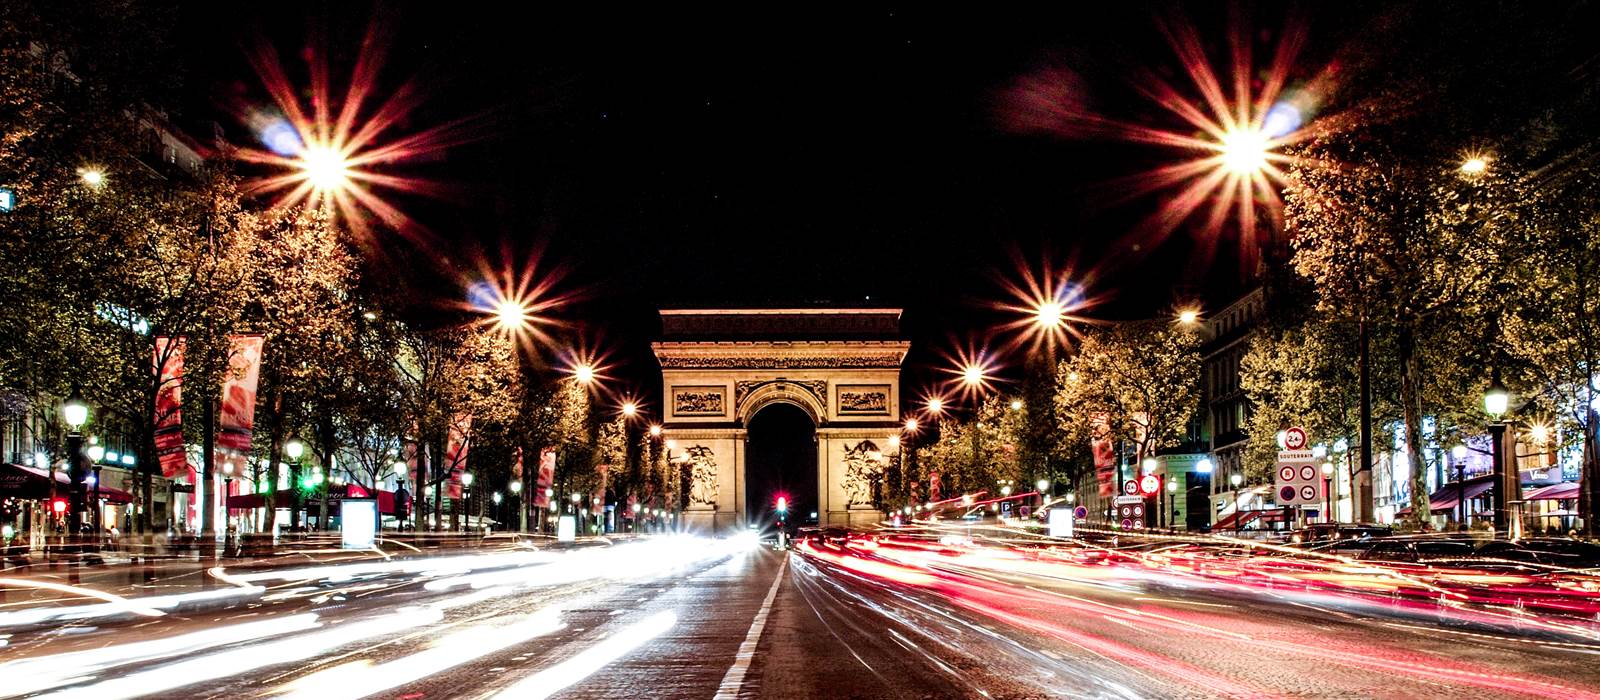 Champs-Élysées at Night